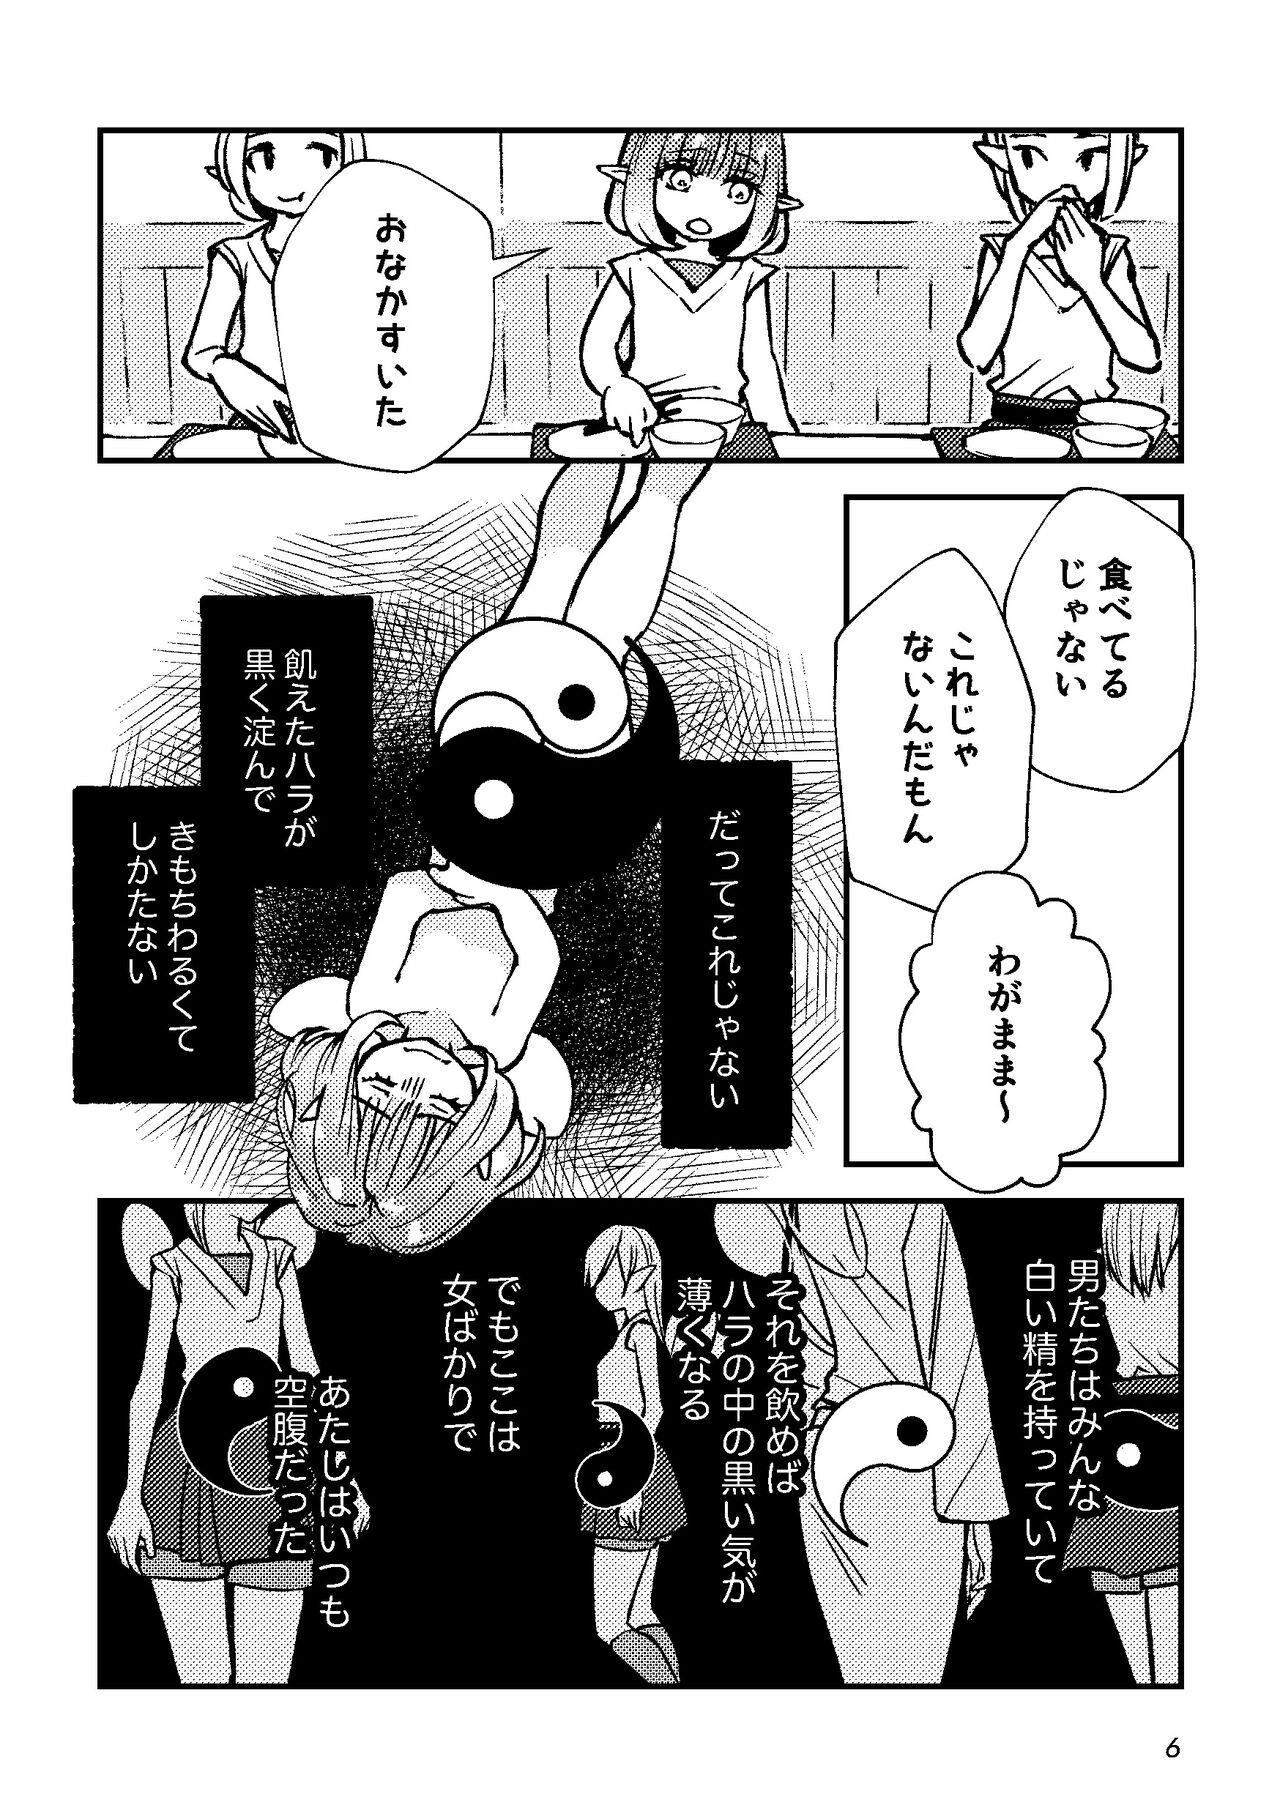 Periscope 半陰陽 - Dragon quest x Mms - Page 6